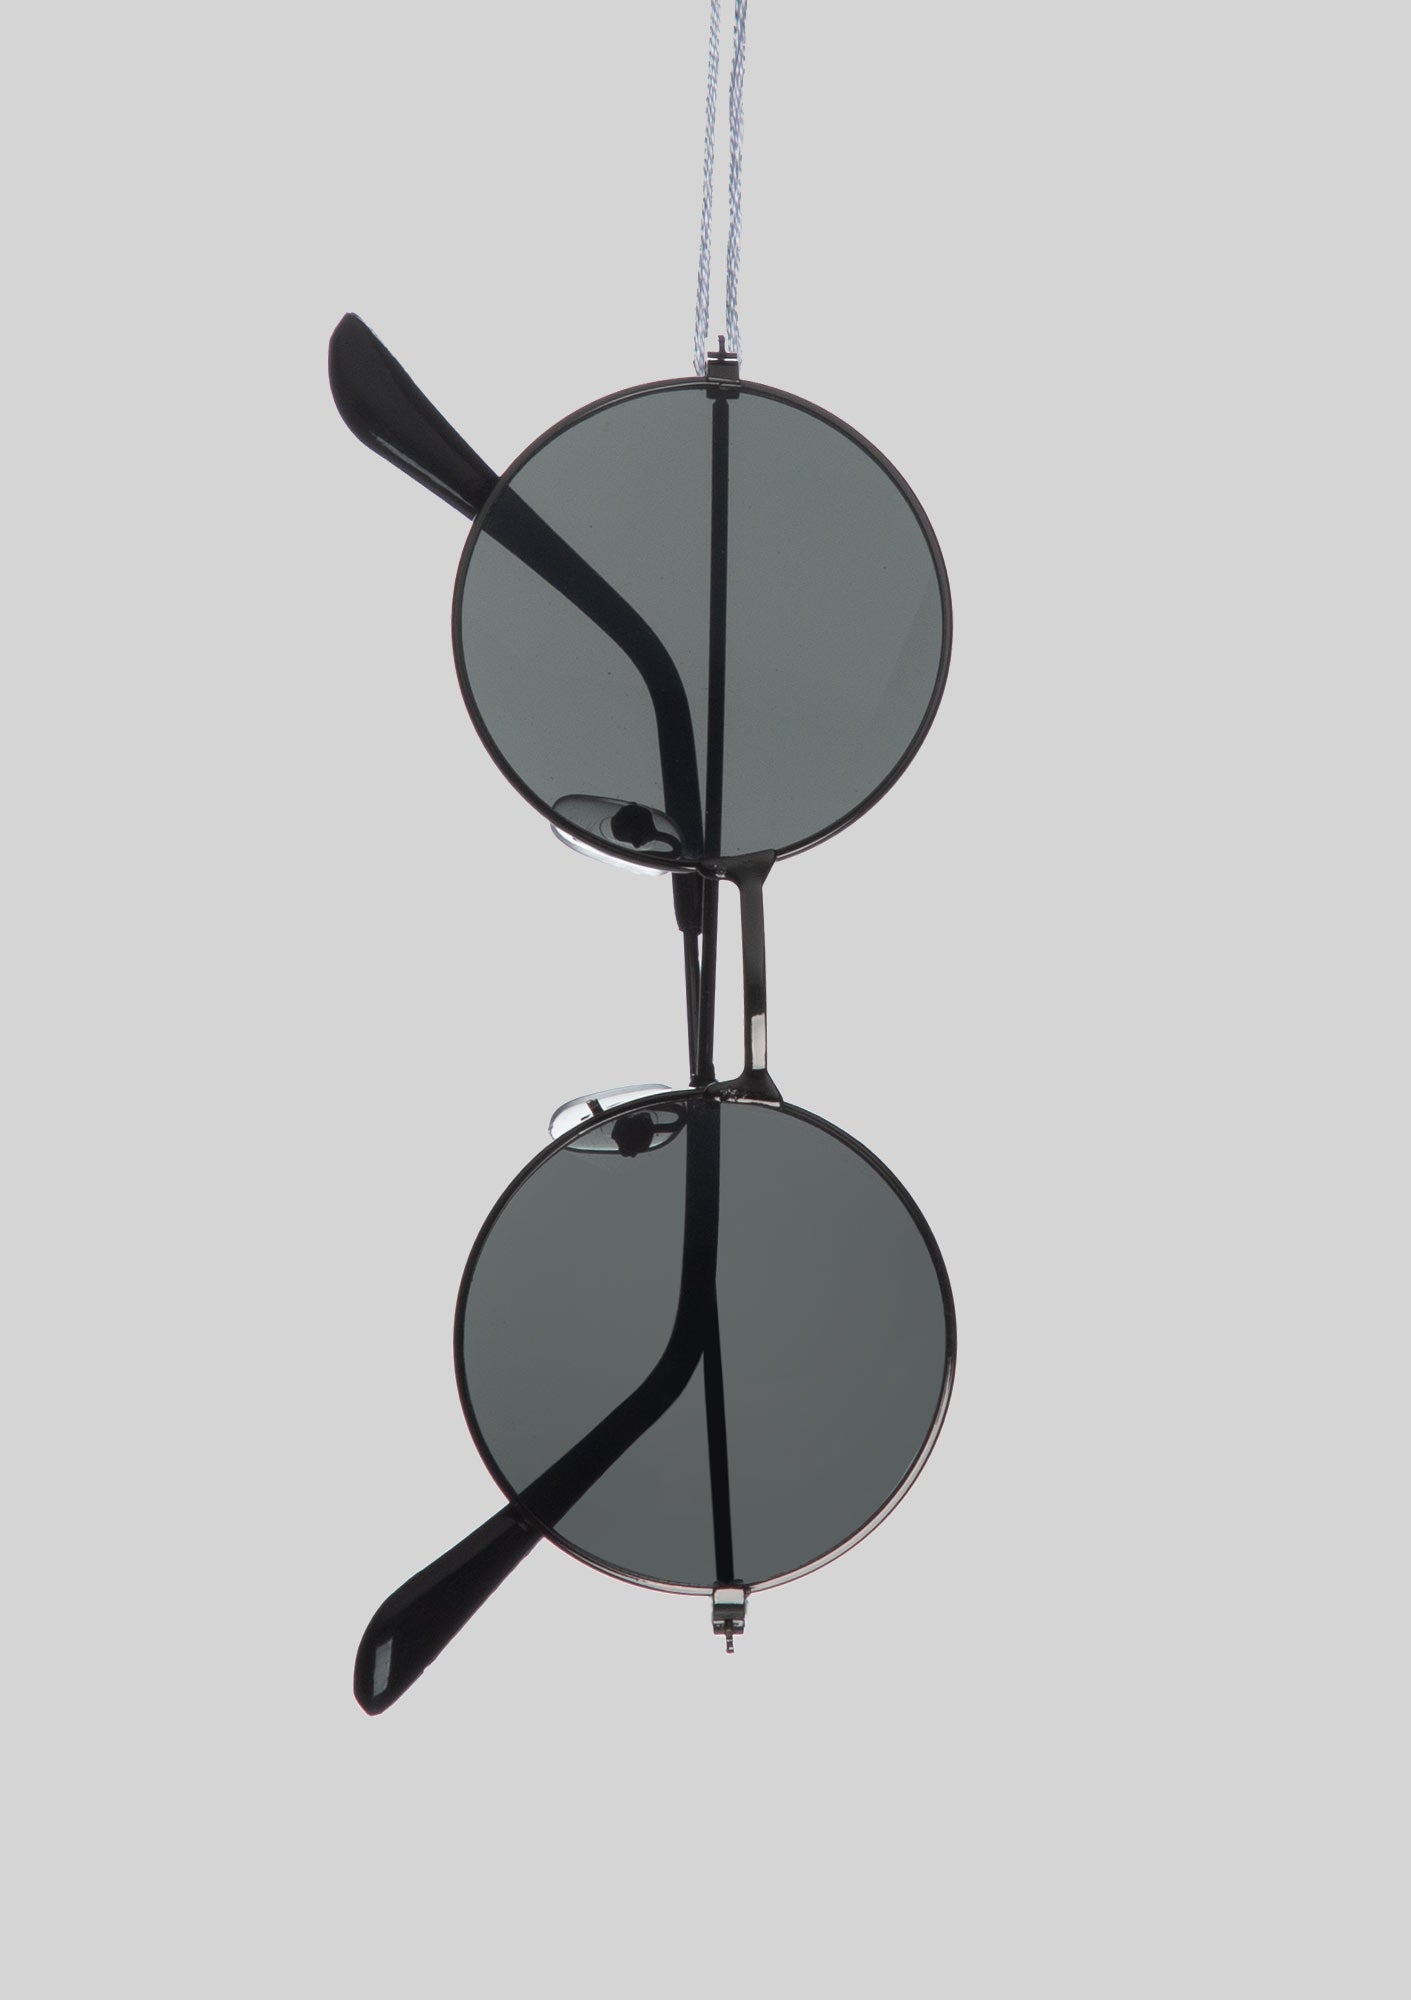 Round Black Gunmetal Frame Sunglasses